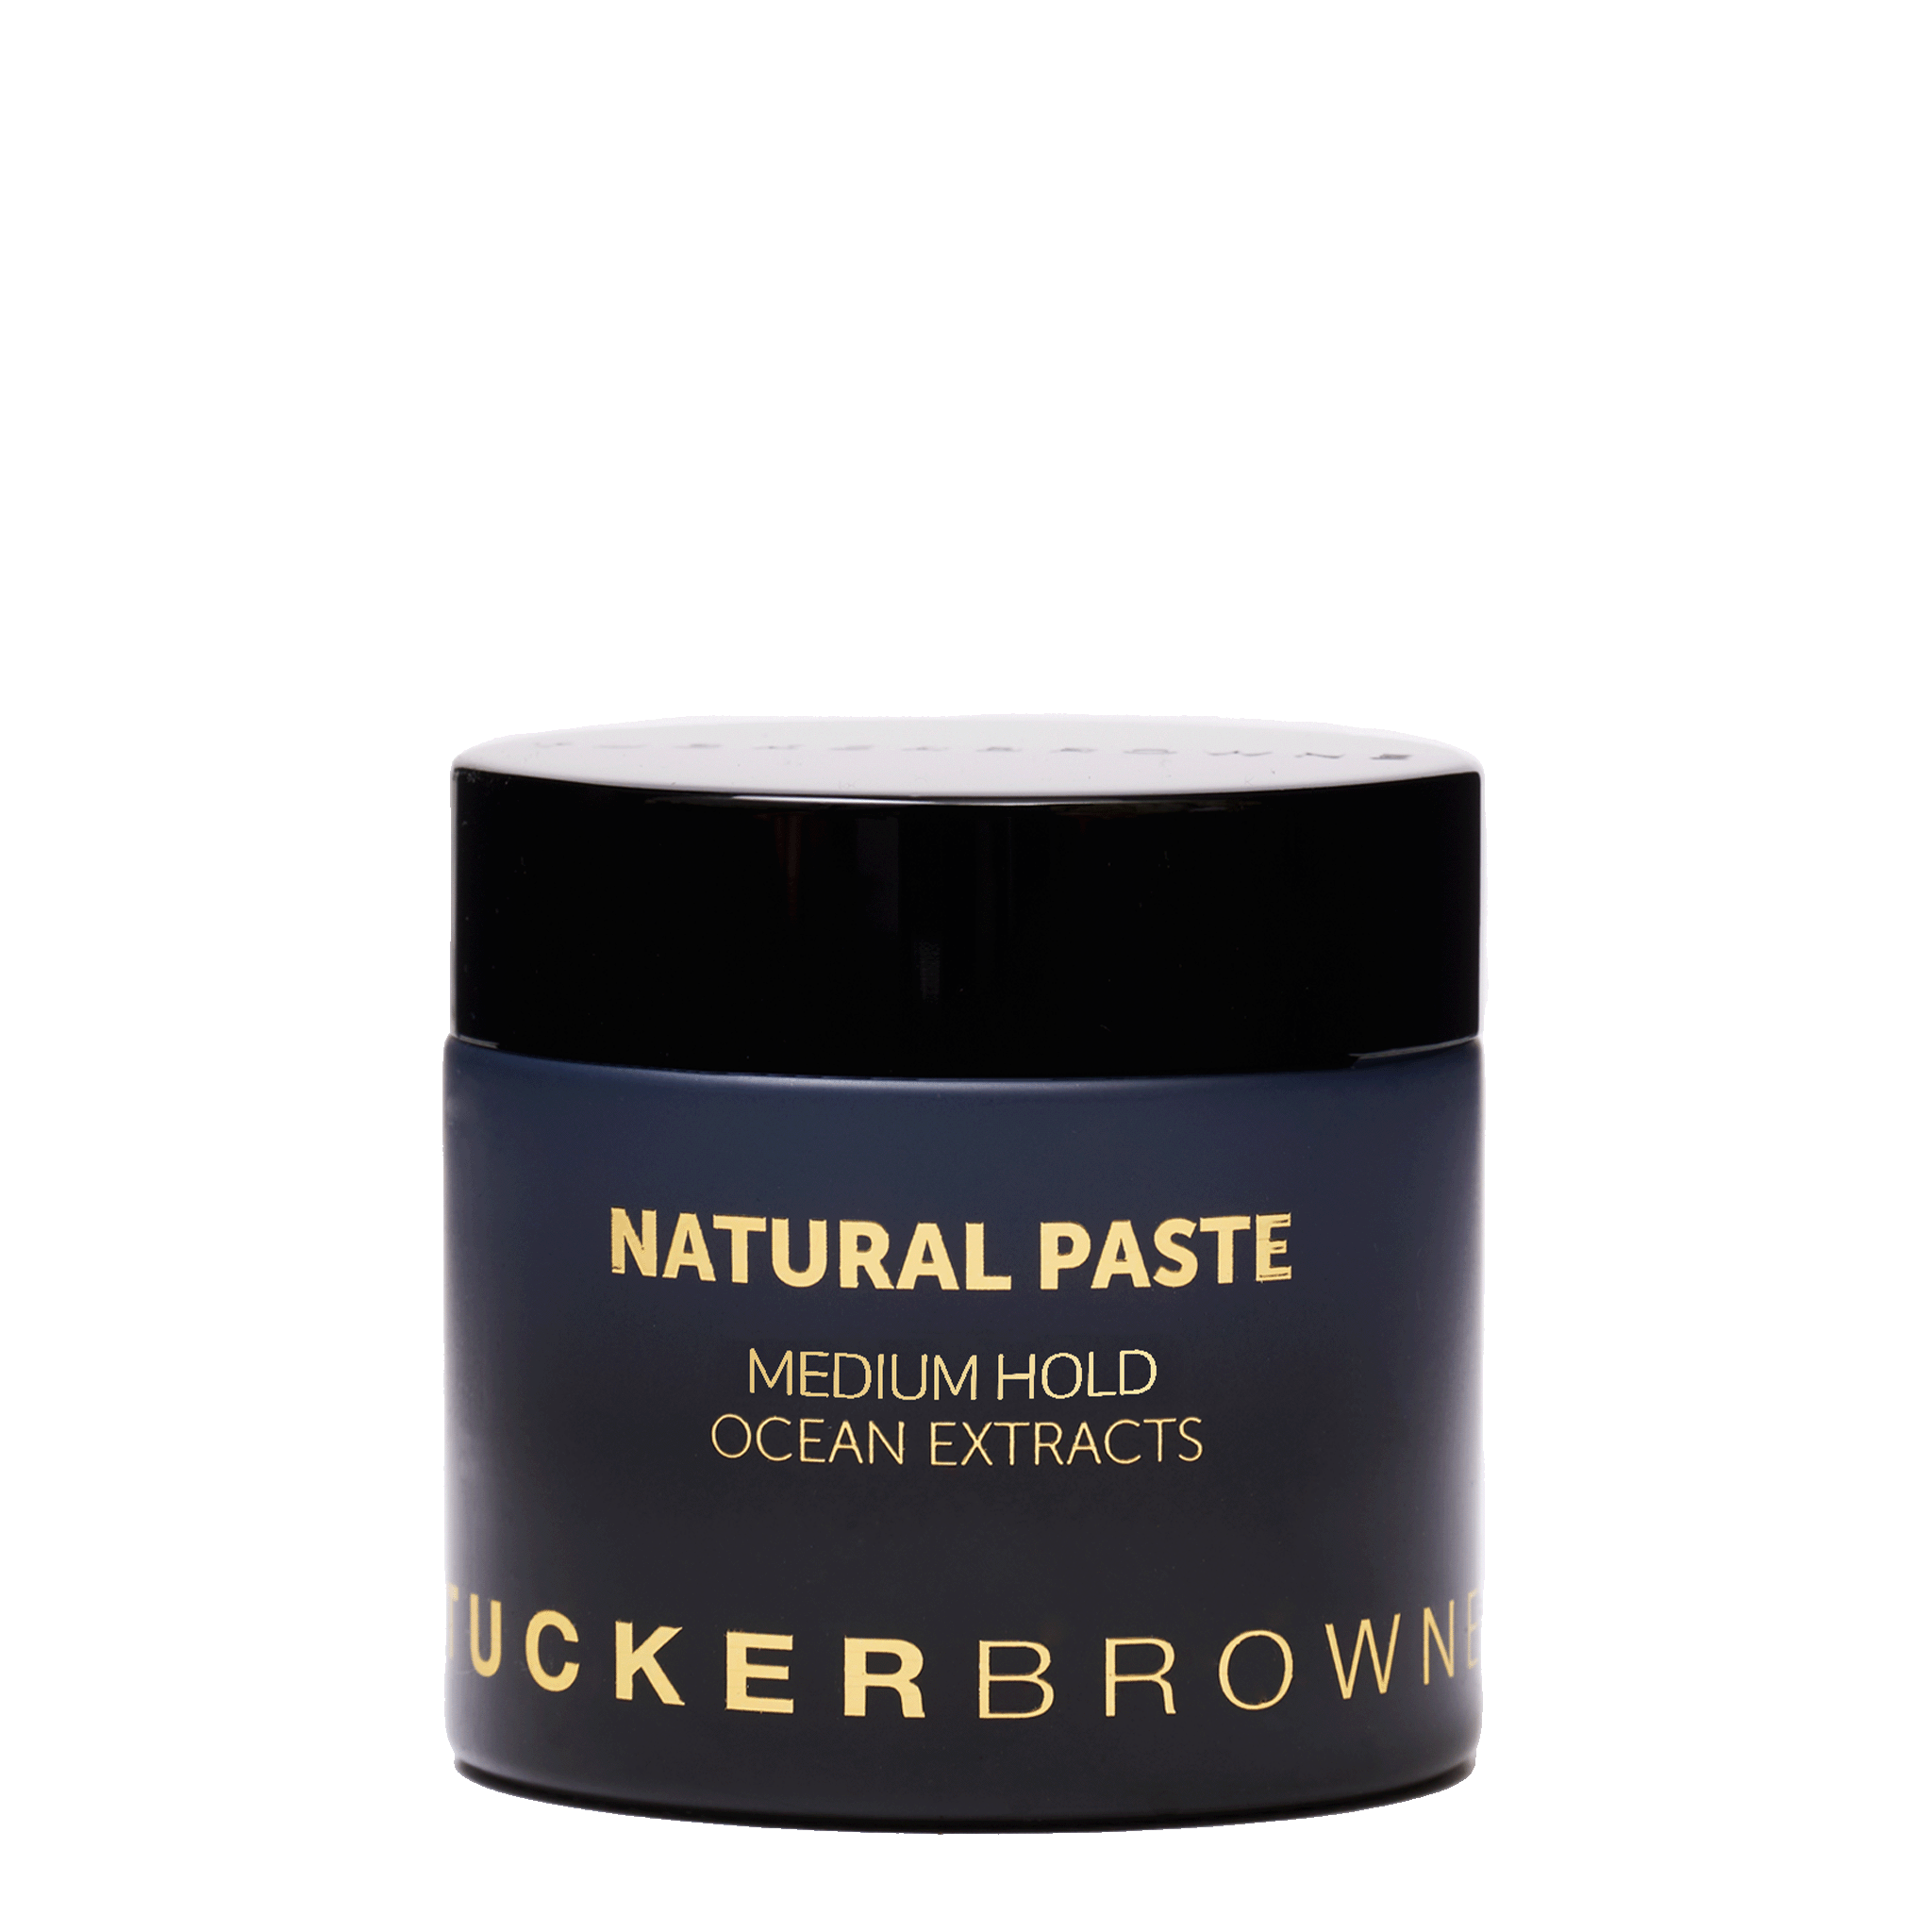 Tucker Browne Natural Paste 60g